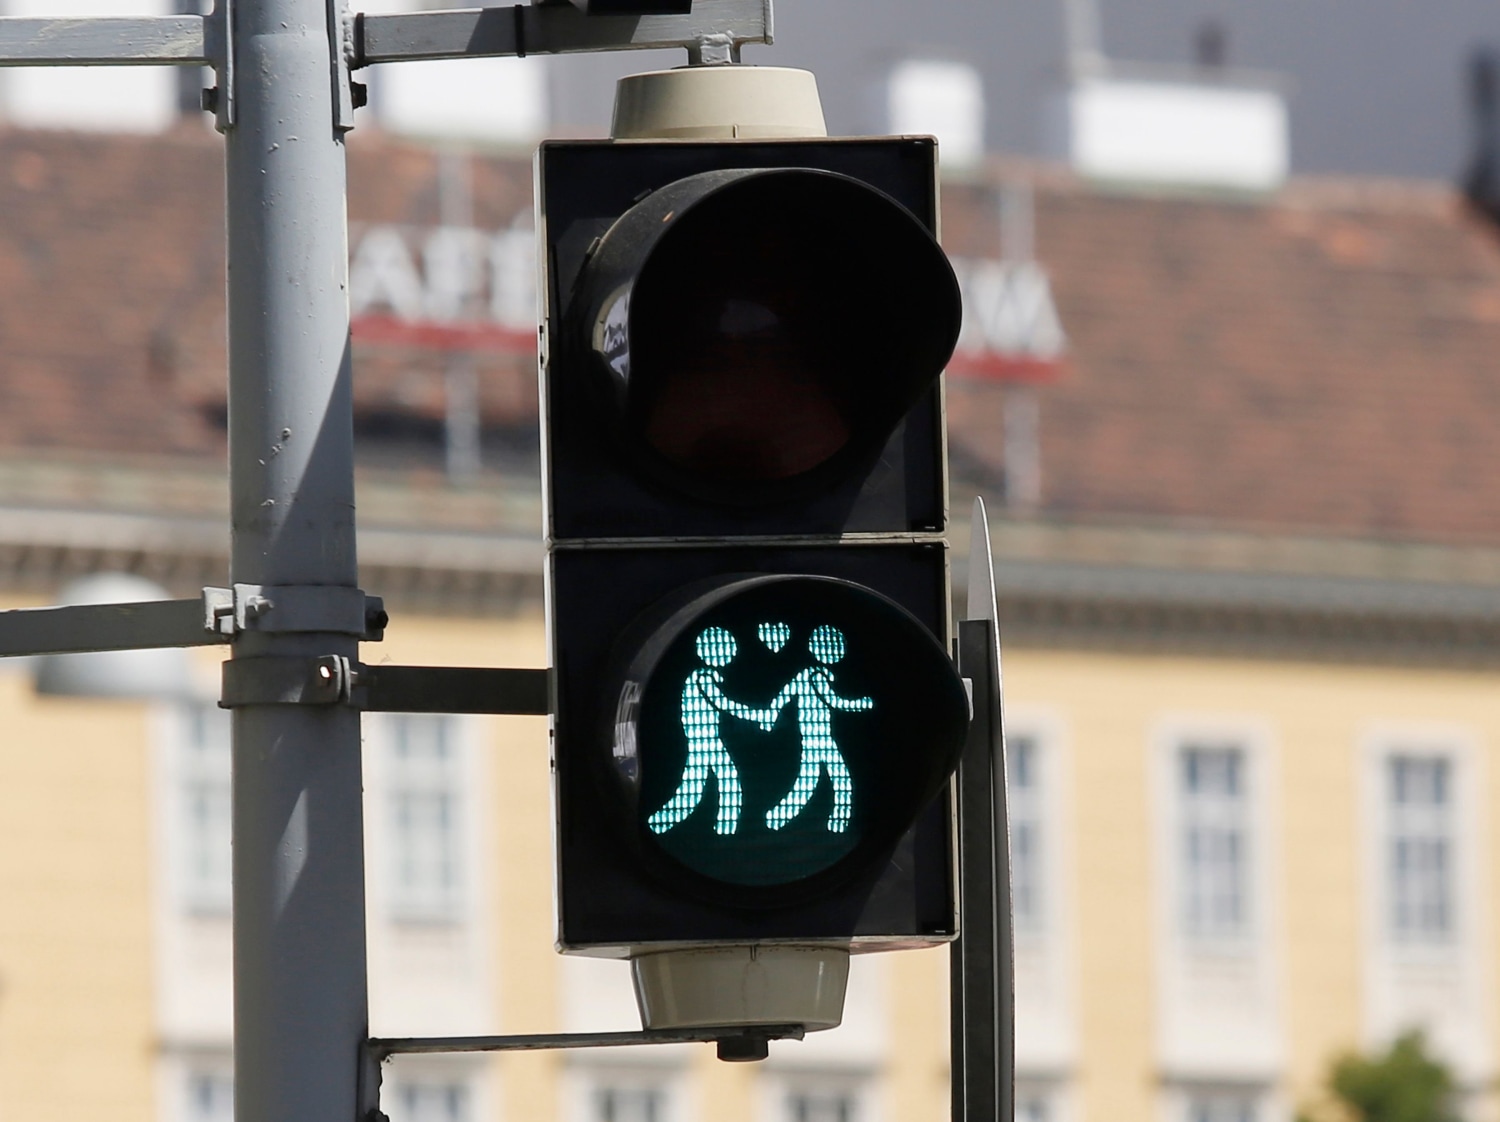 Austrias supreme court paves way for same-sex marriage